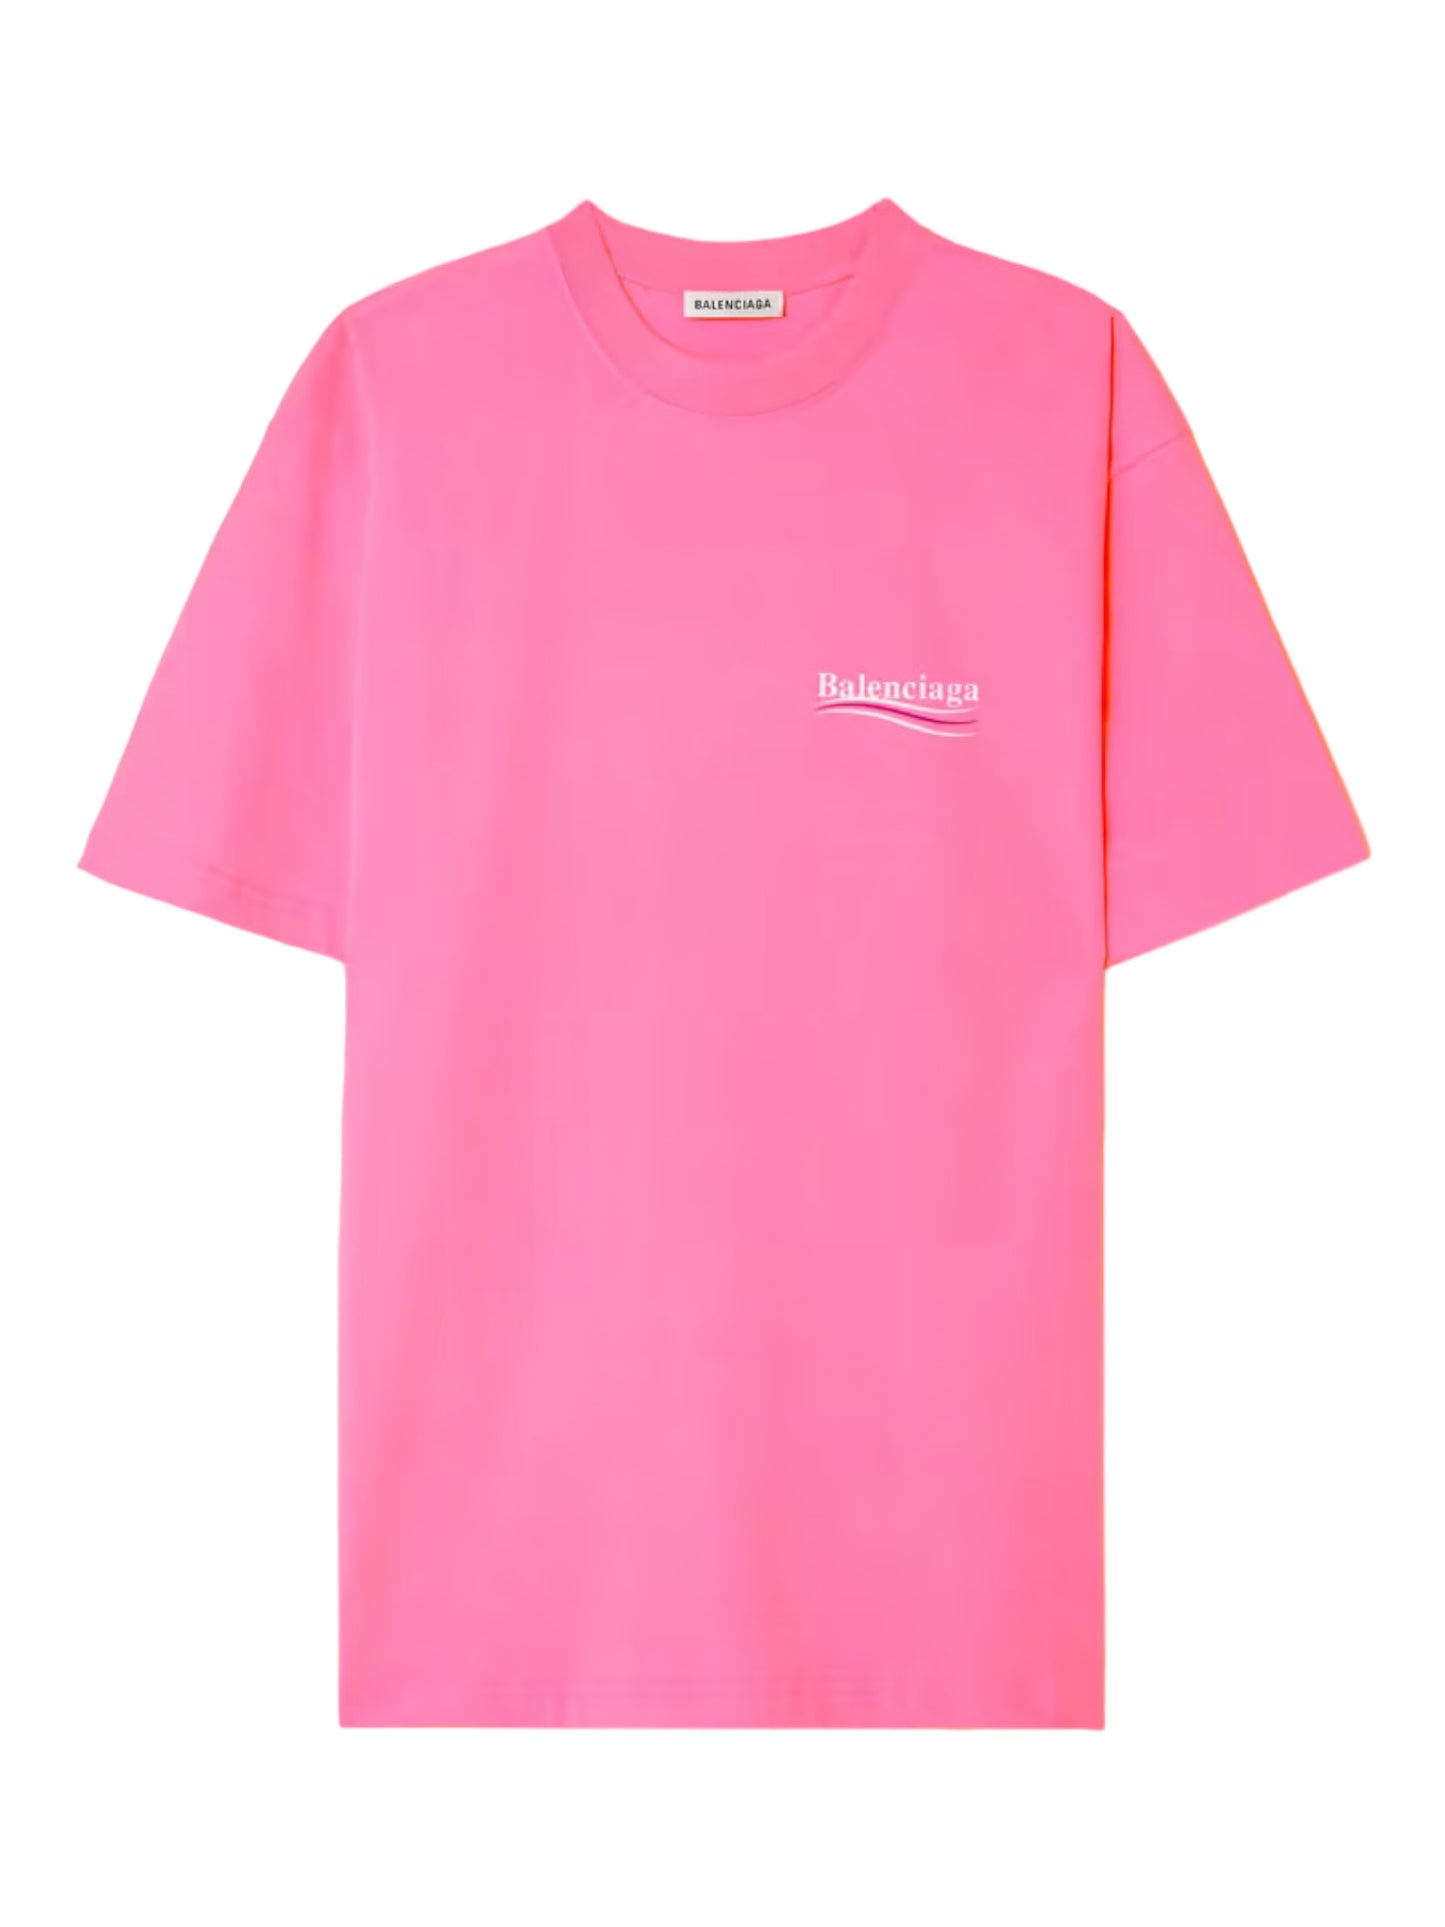 Balenciaga Pink Oversized Cotton Jersey T-Shirt